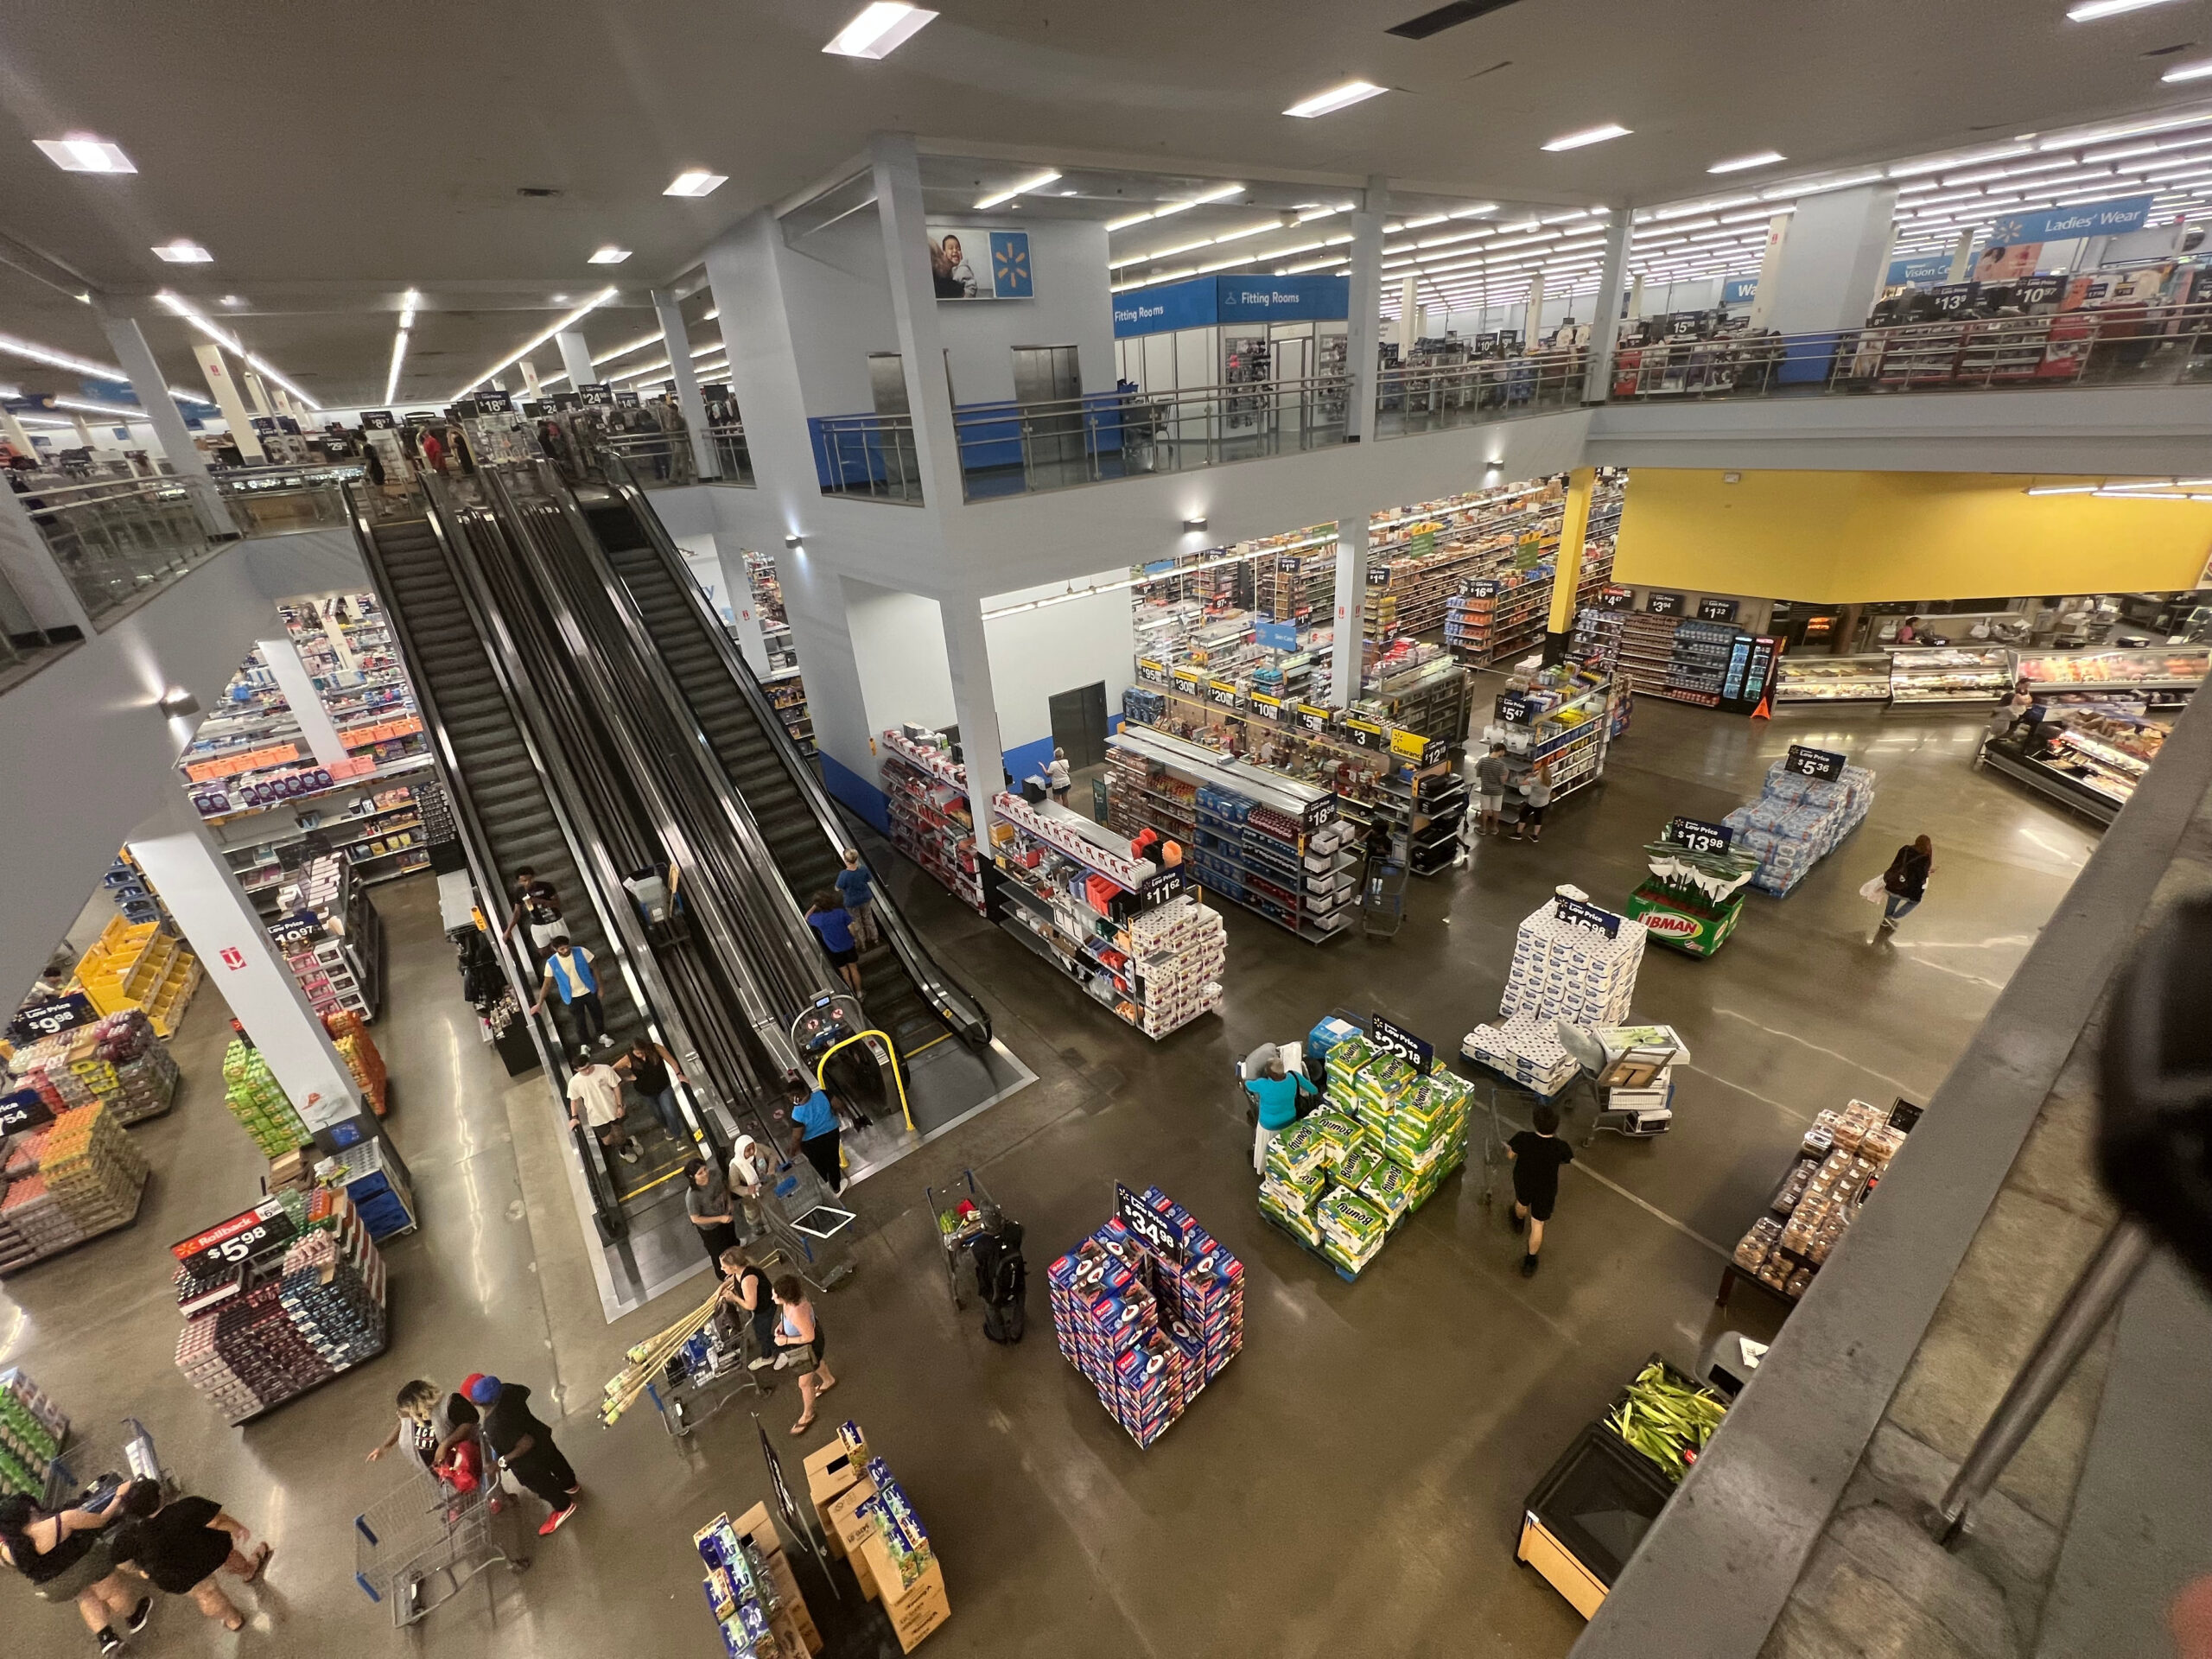 World's Largest Walmart Supercenter: world record in Albany, New York